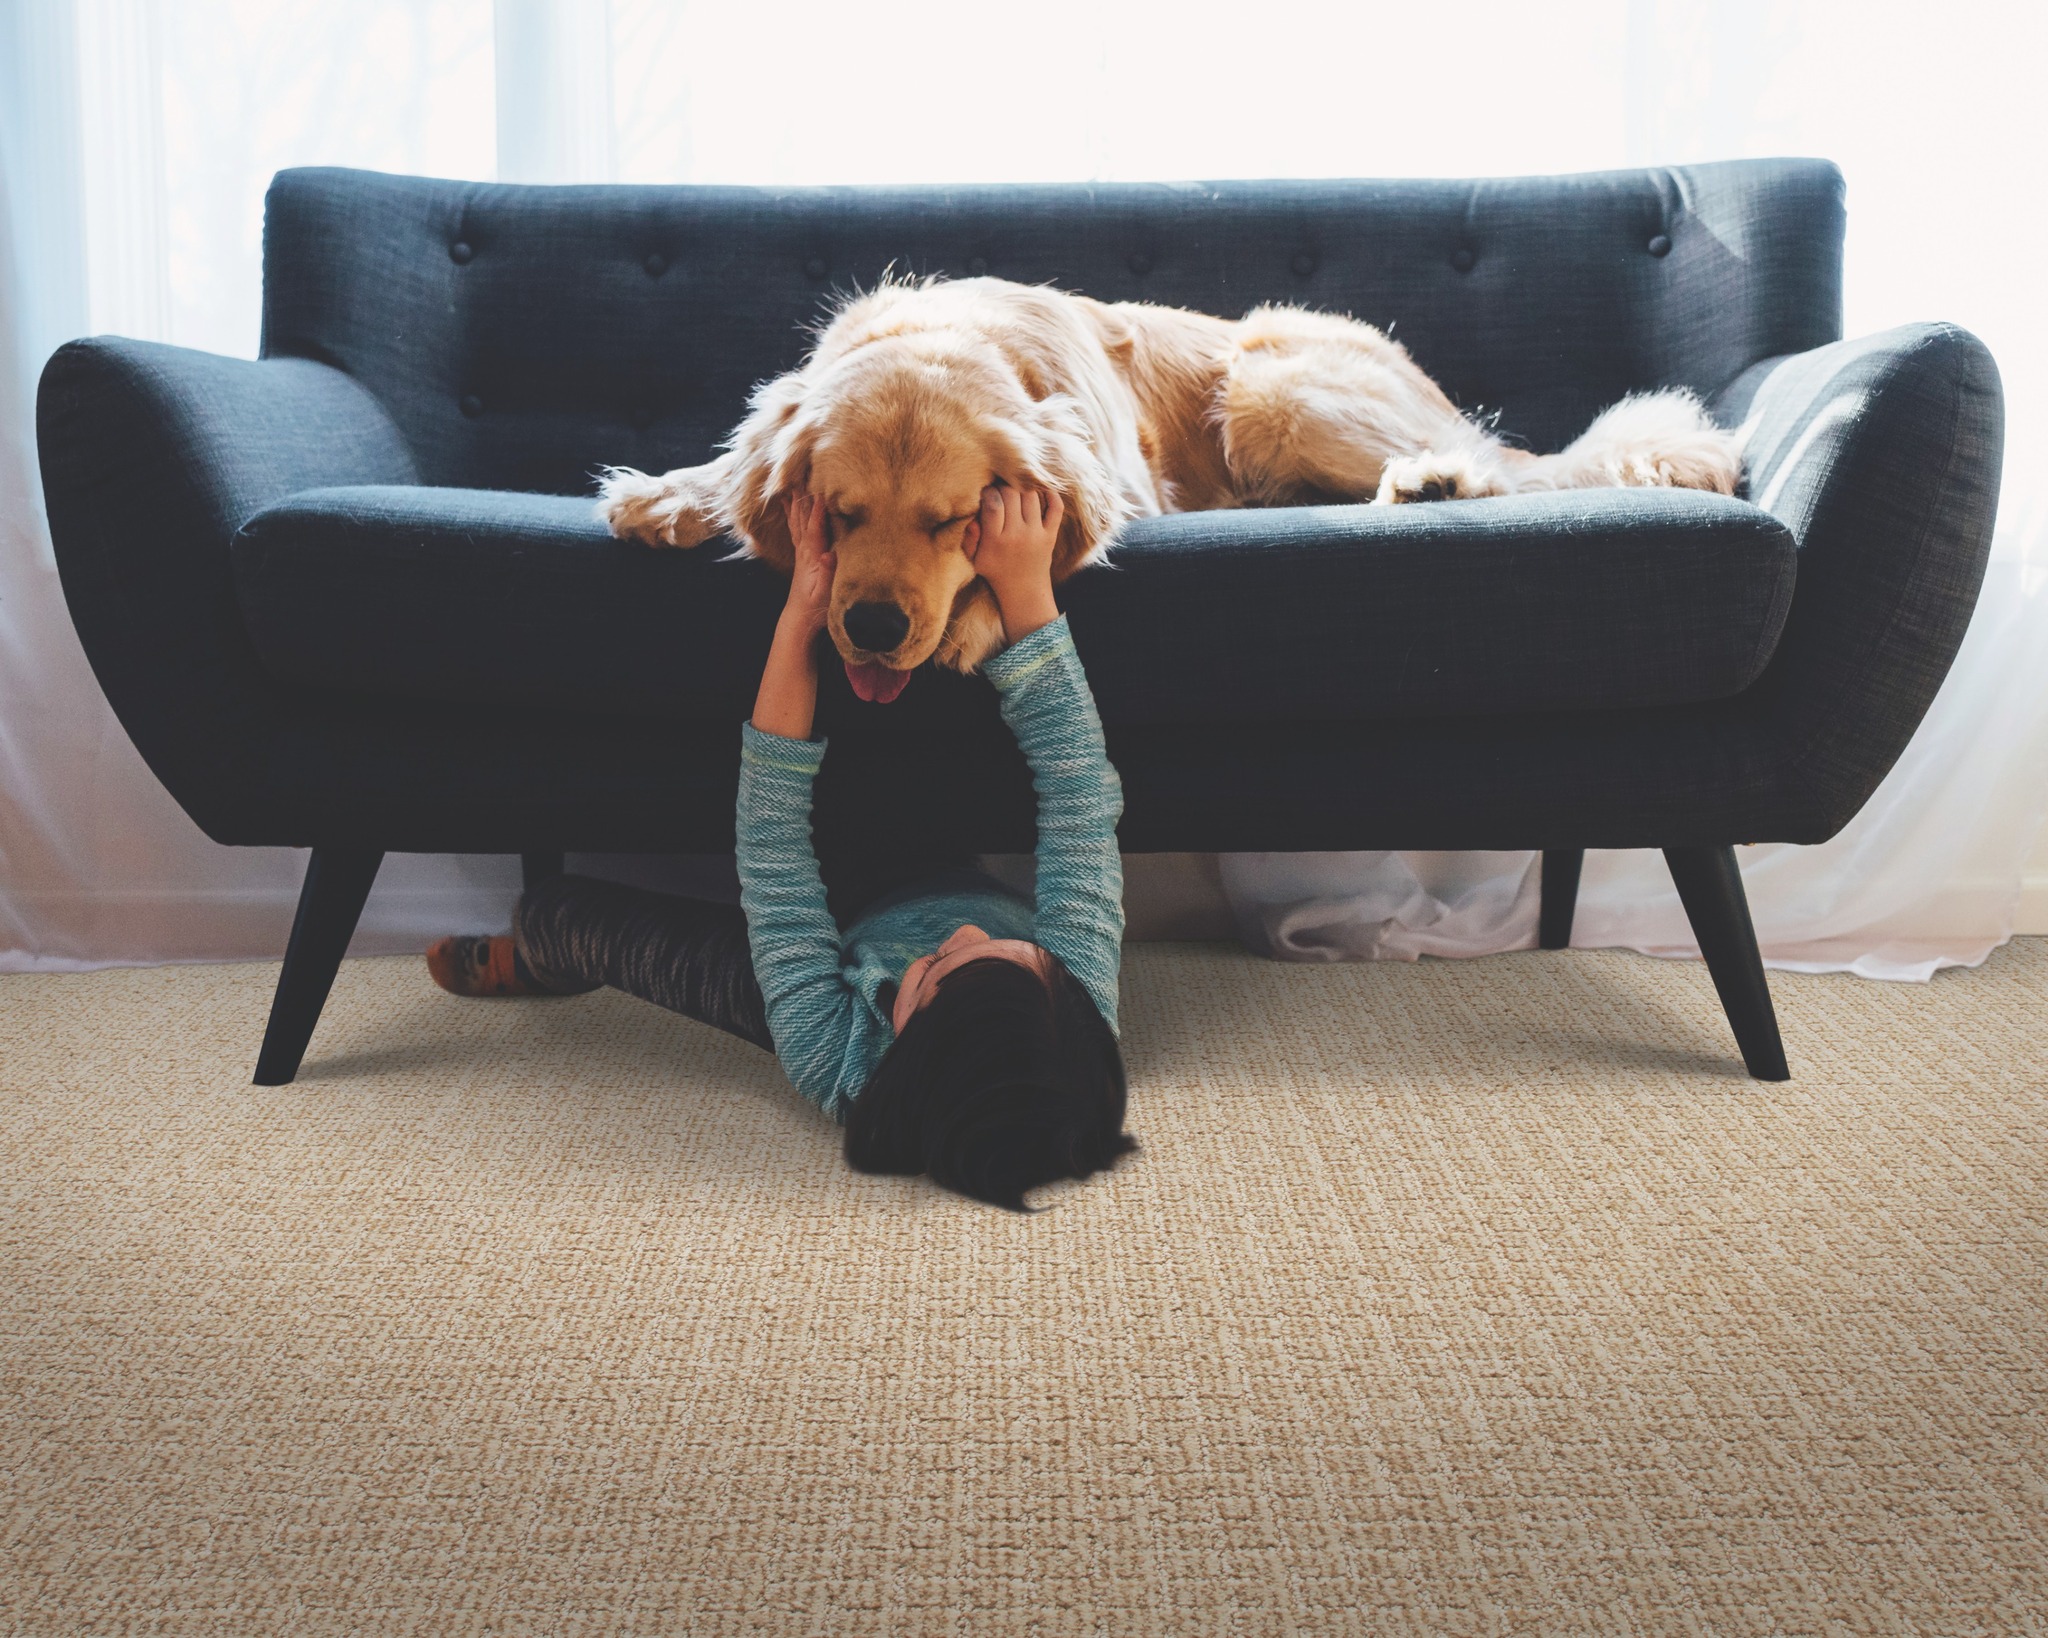 Child on Carpet with Dog